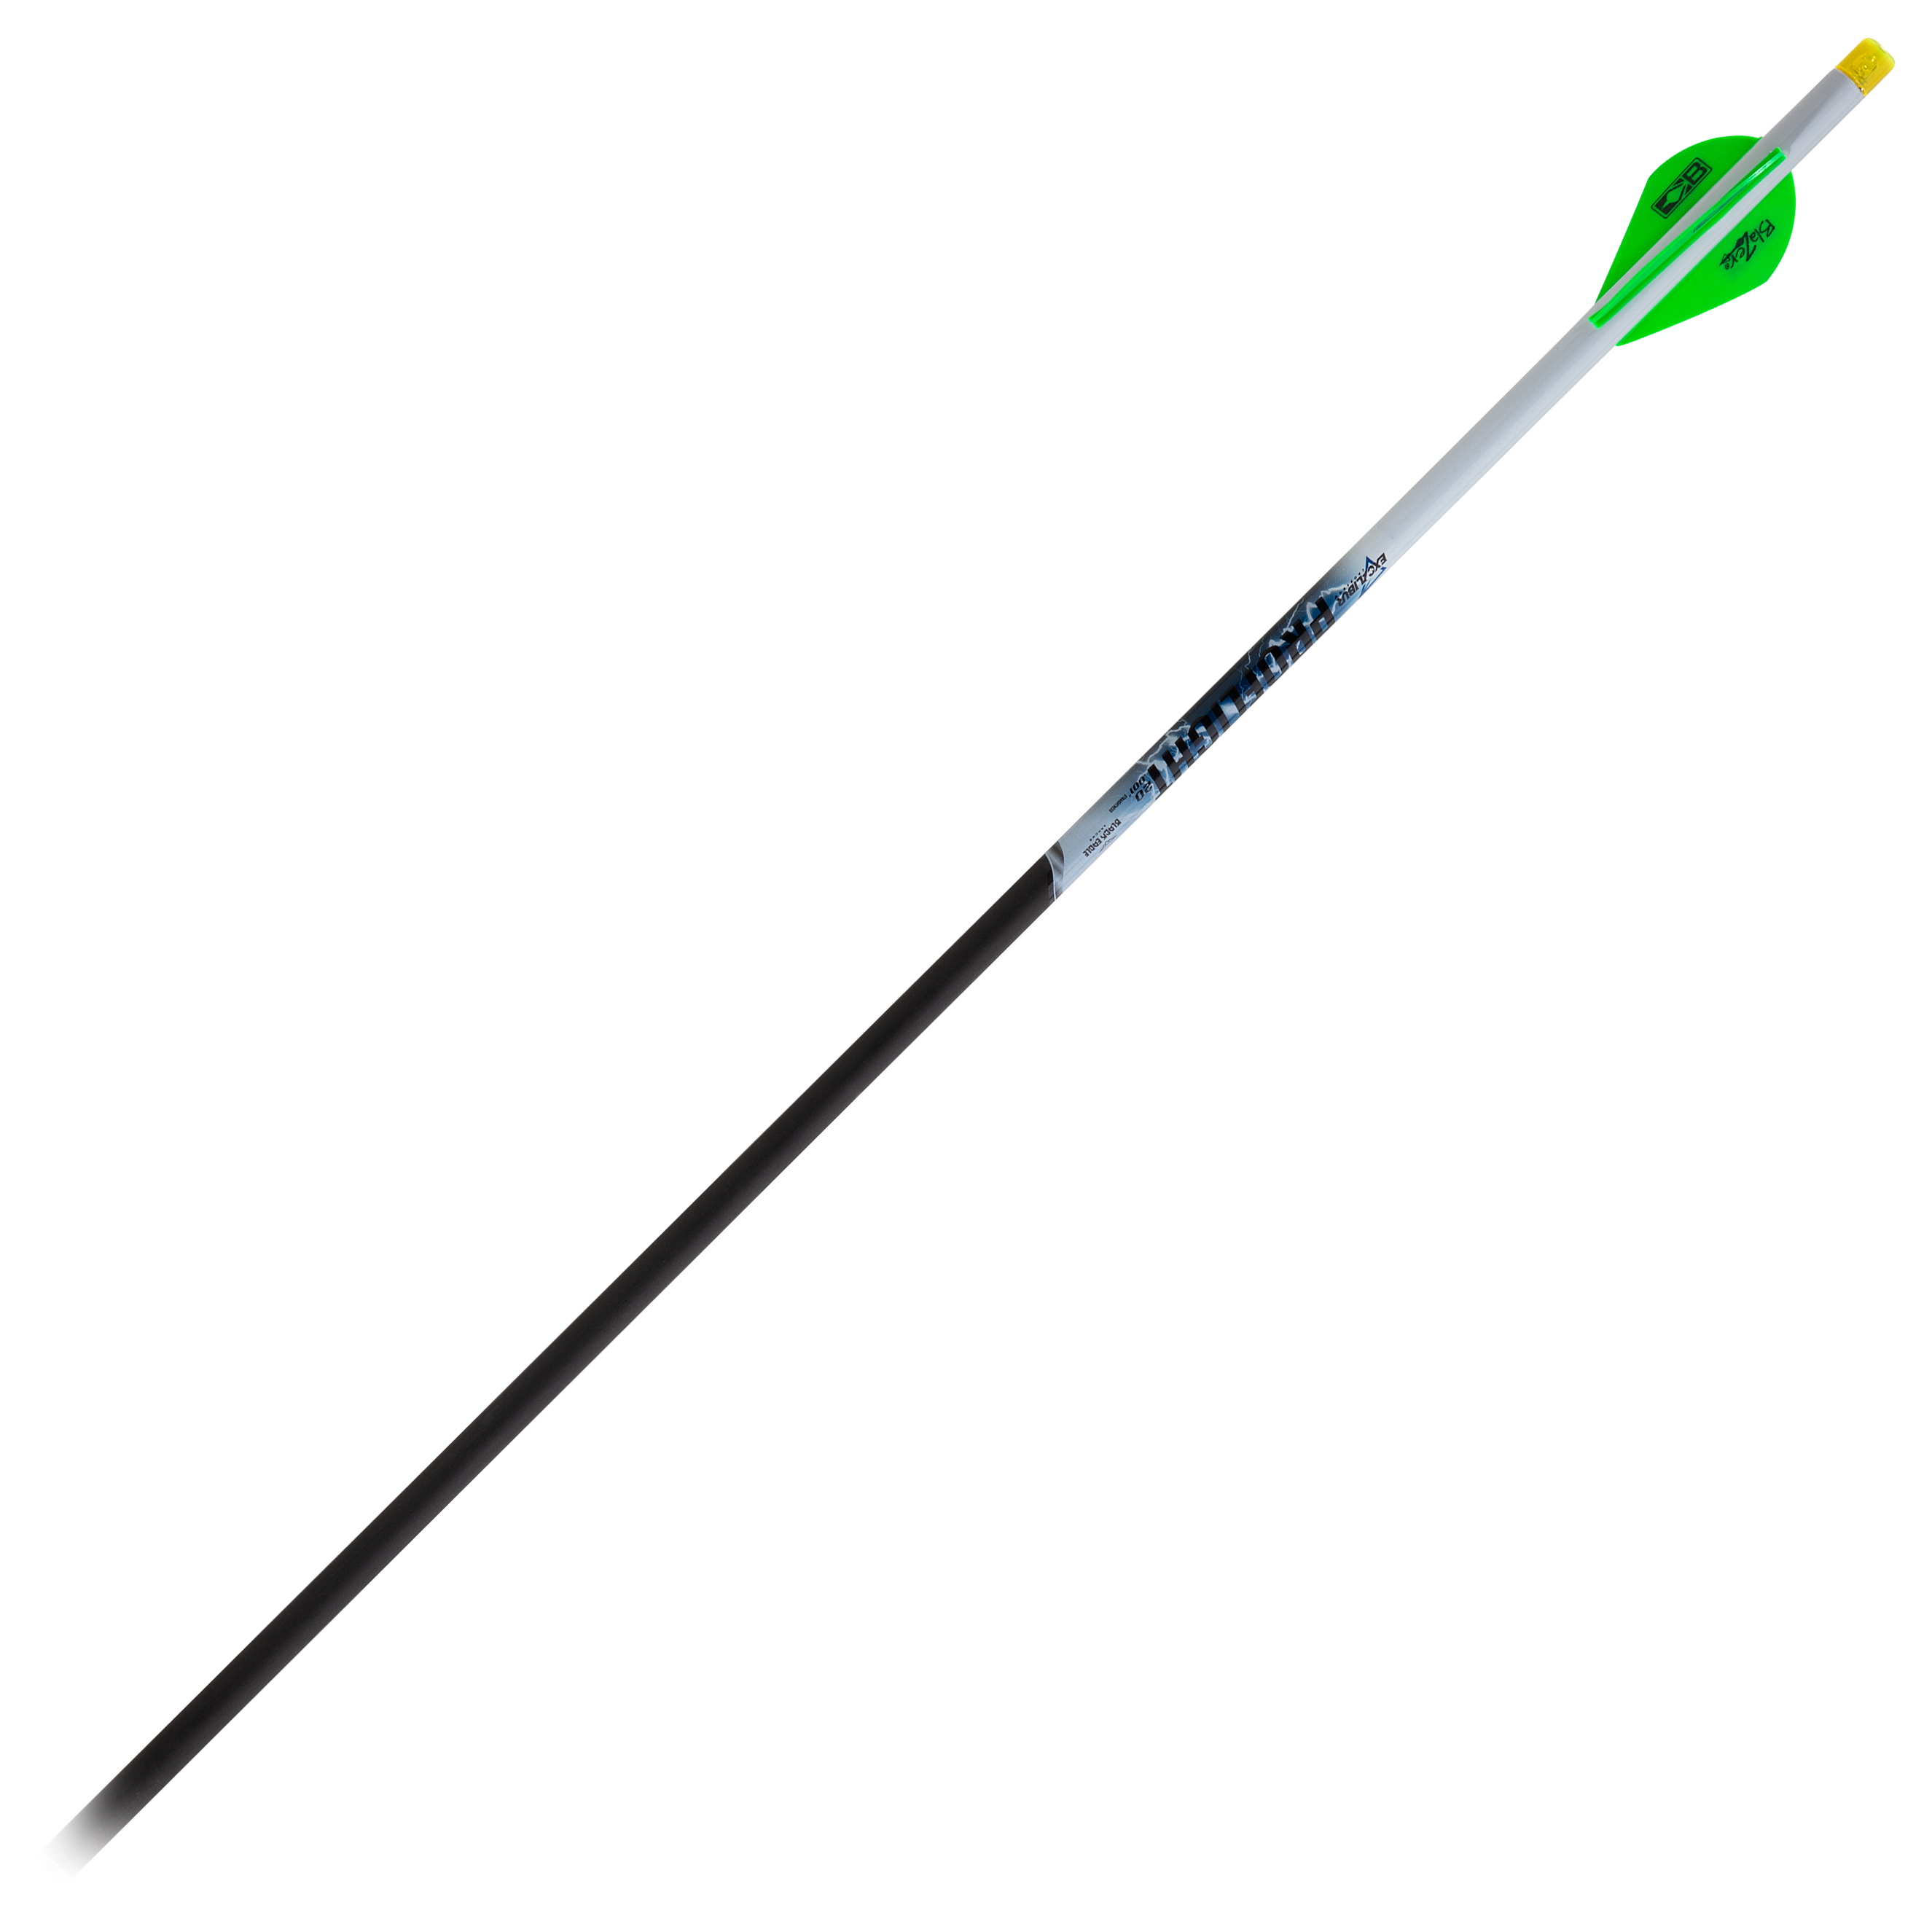 Excalibur Proflight Illuminated Crossbow Arrows